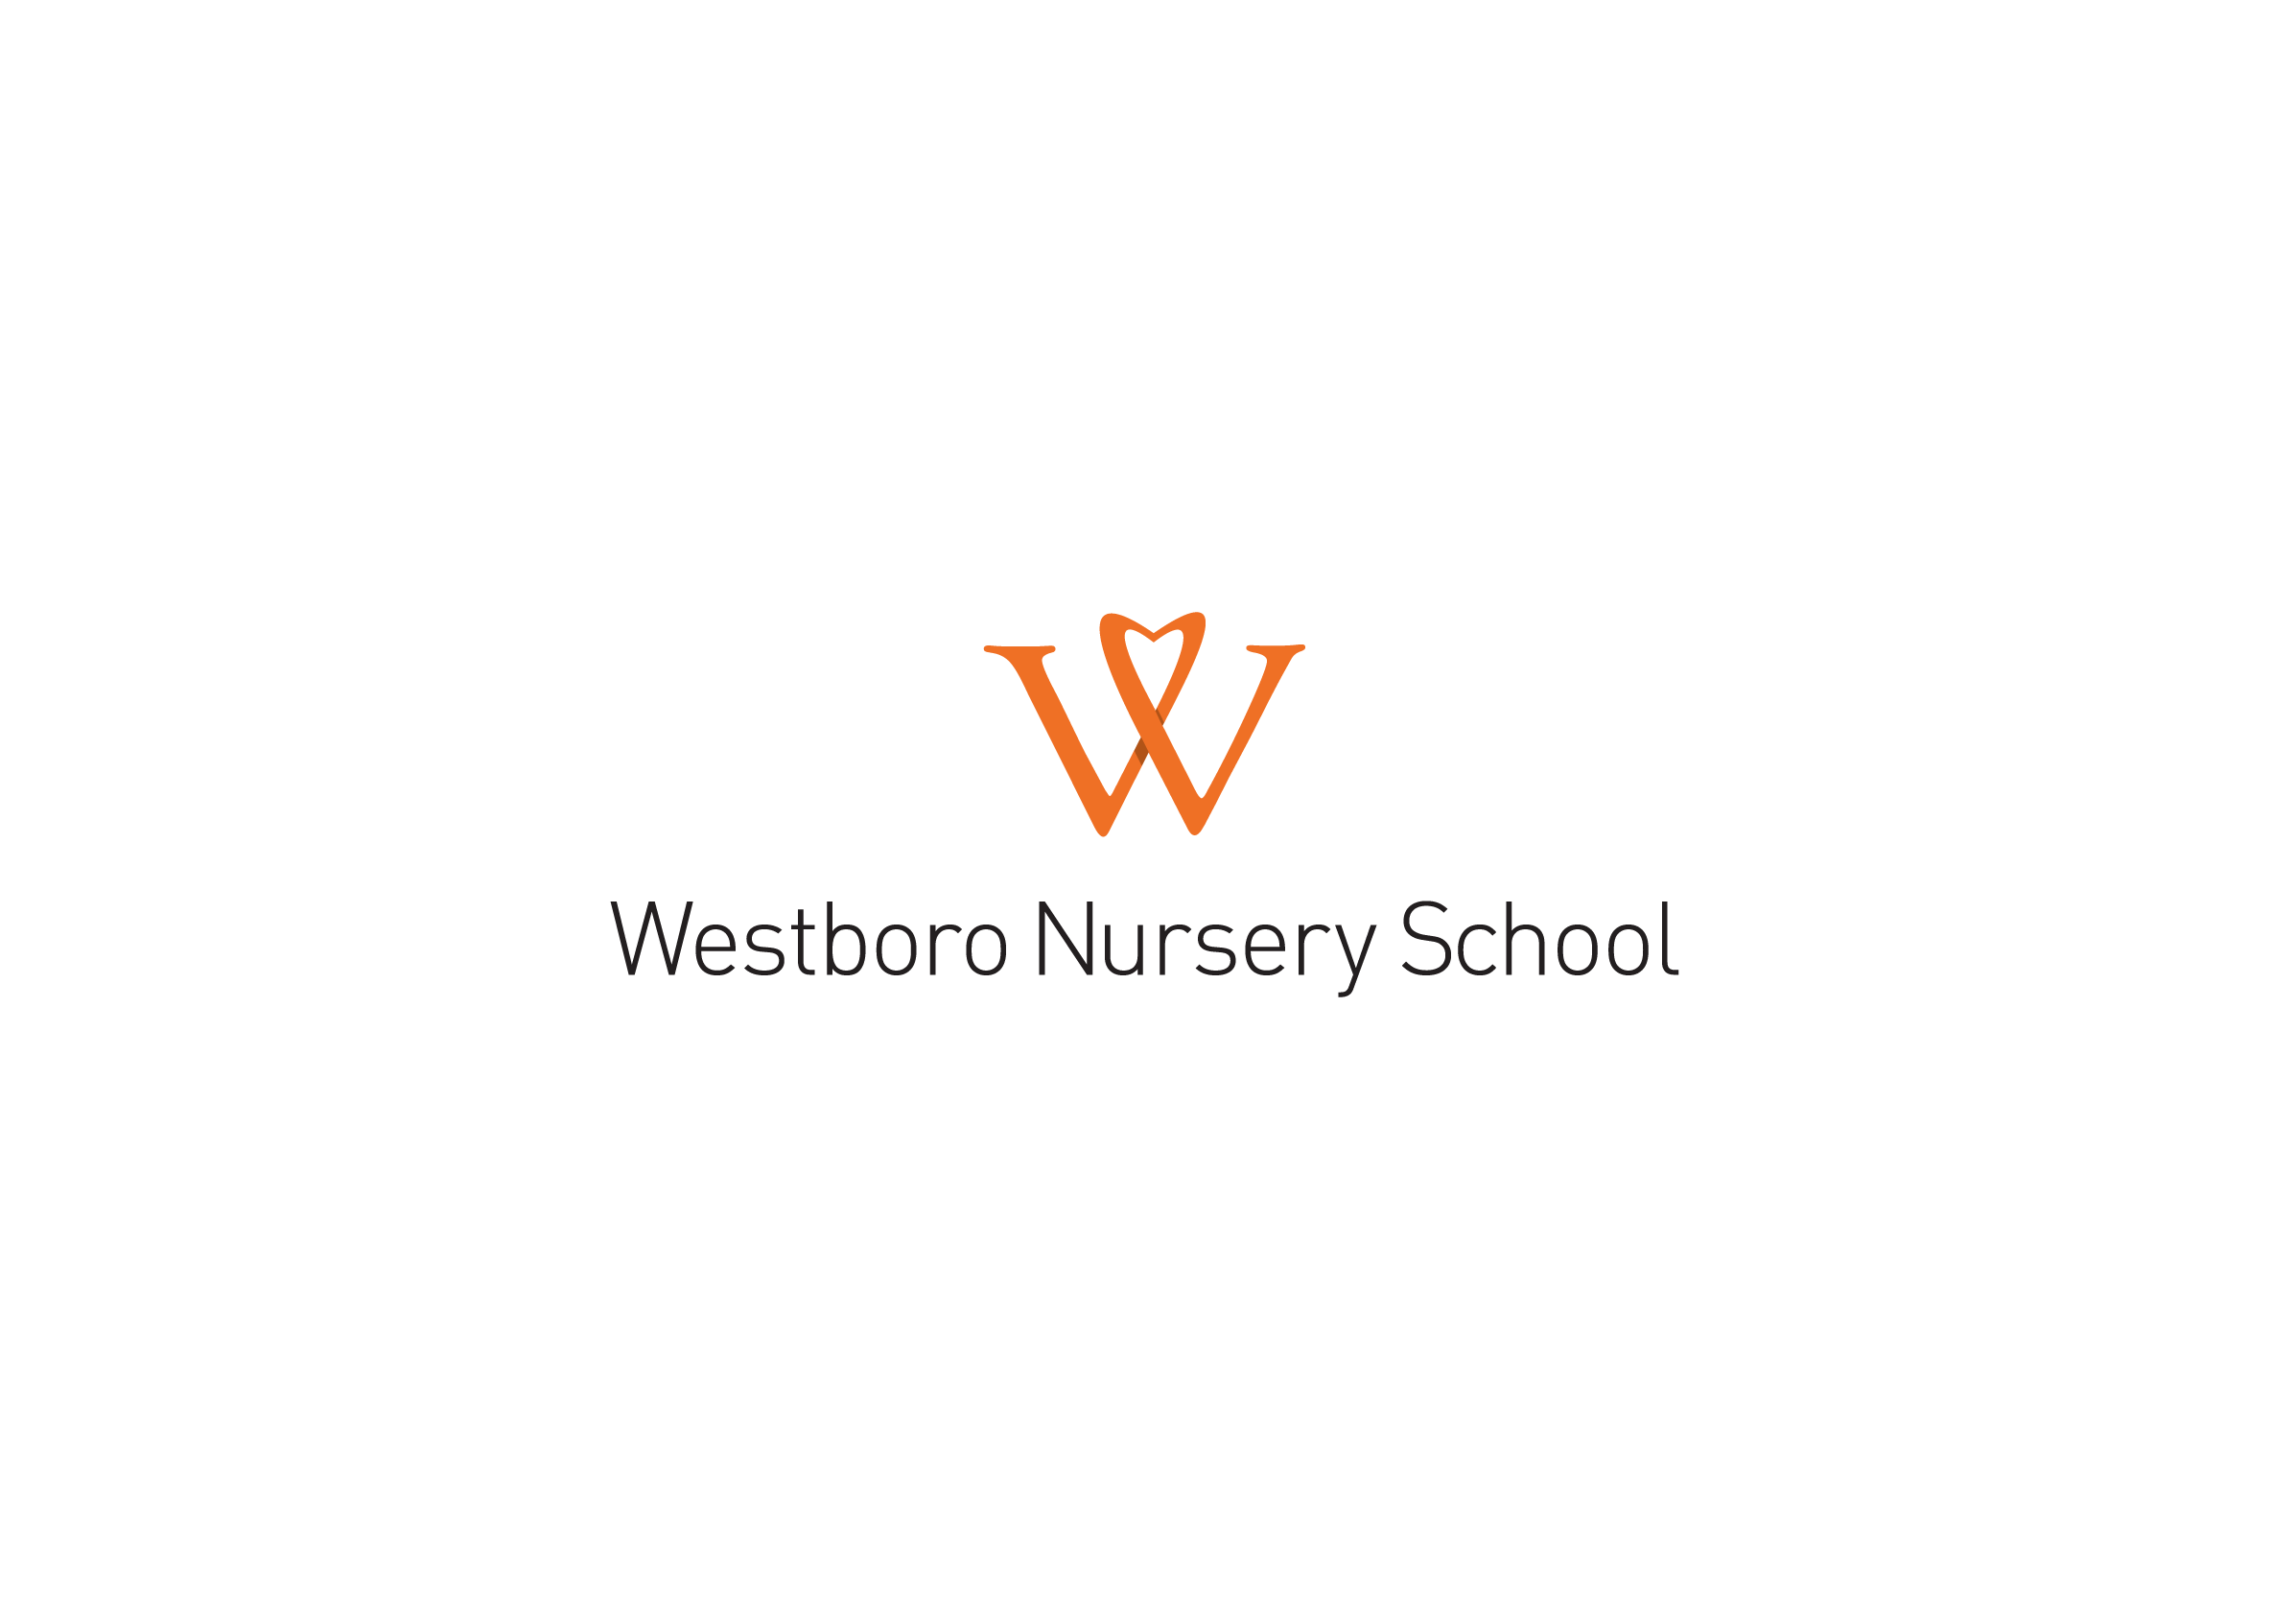 Logo for Westboro Nursery School, by Ottawa Graphic Design Studio idApostle